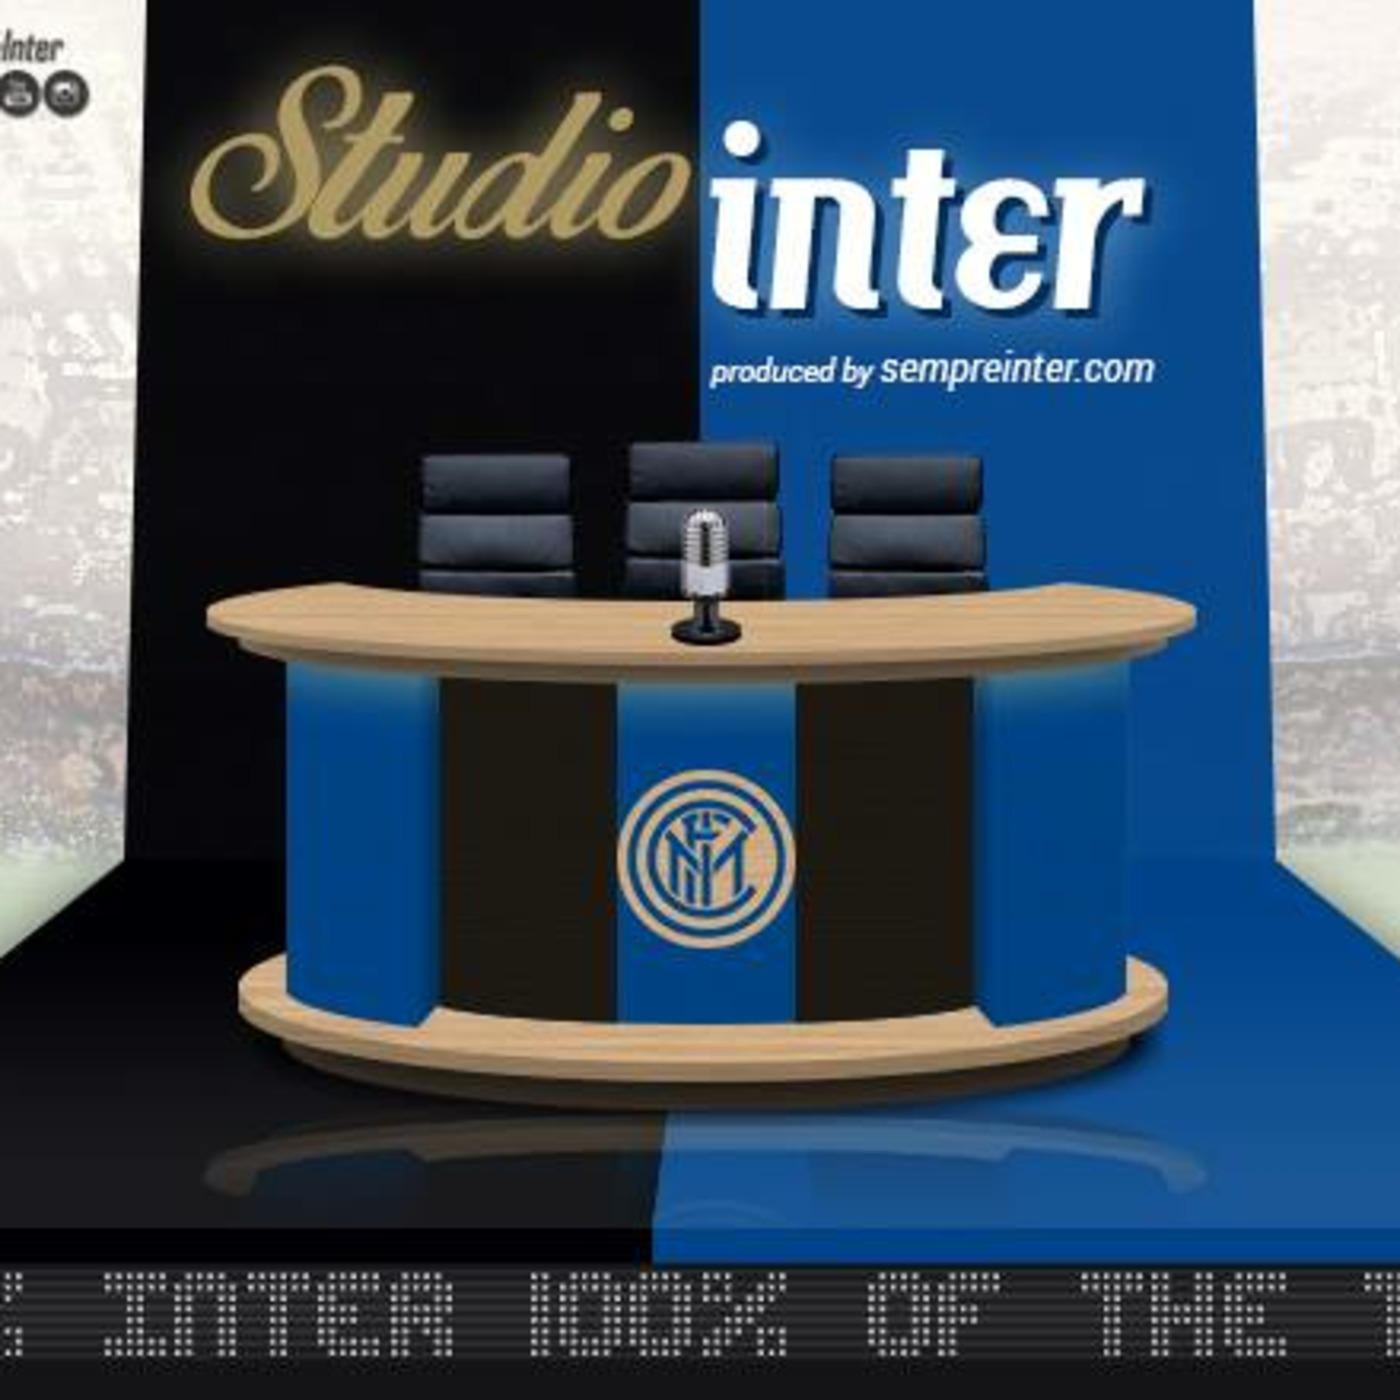 Studio Inter #65: ”Napoli demolished Inter in 6 mins”